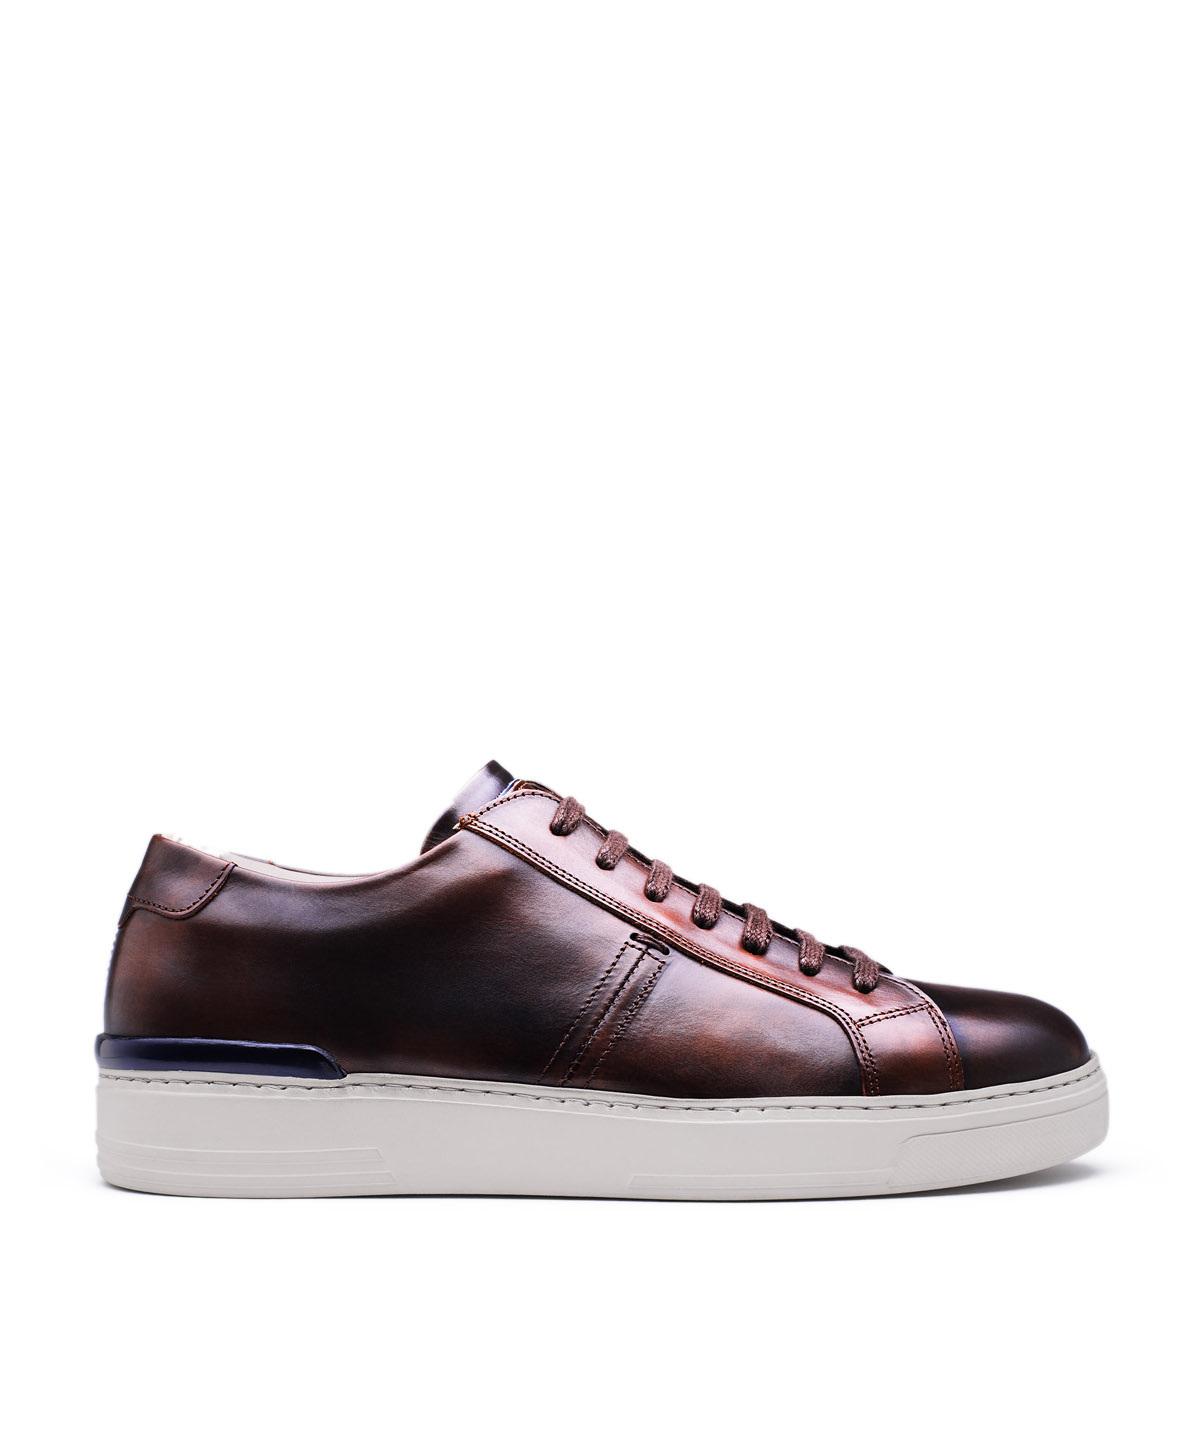 https://www.finsbury-shoes.com/10705-large_default/sneakers-riva-marron-patine.jpg